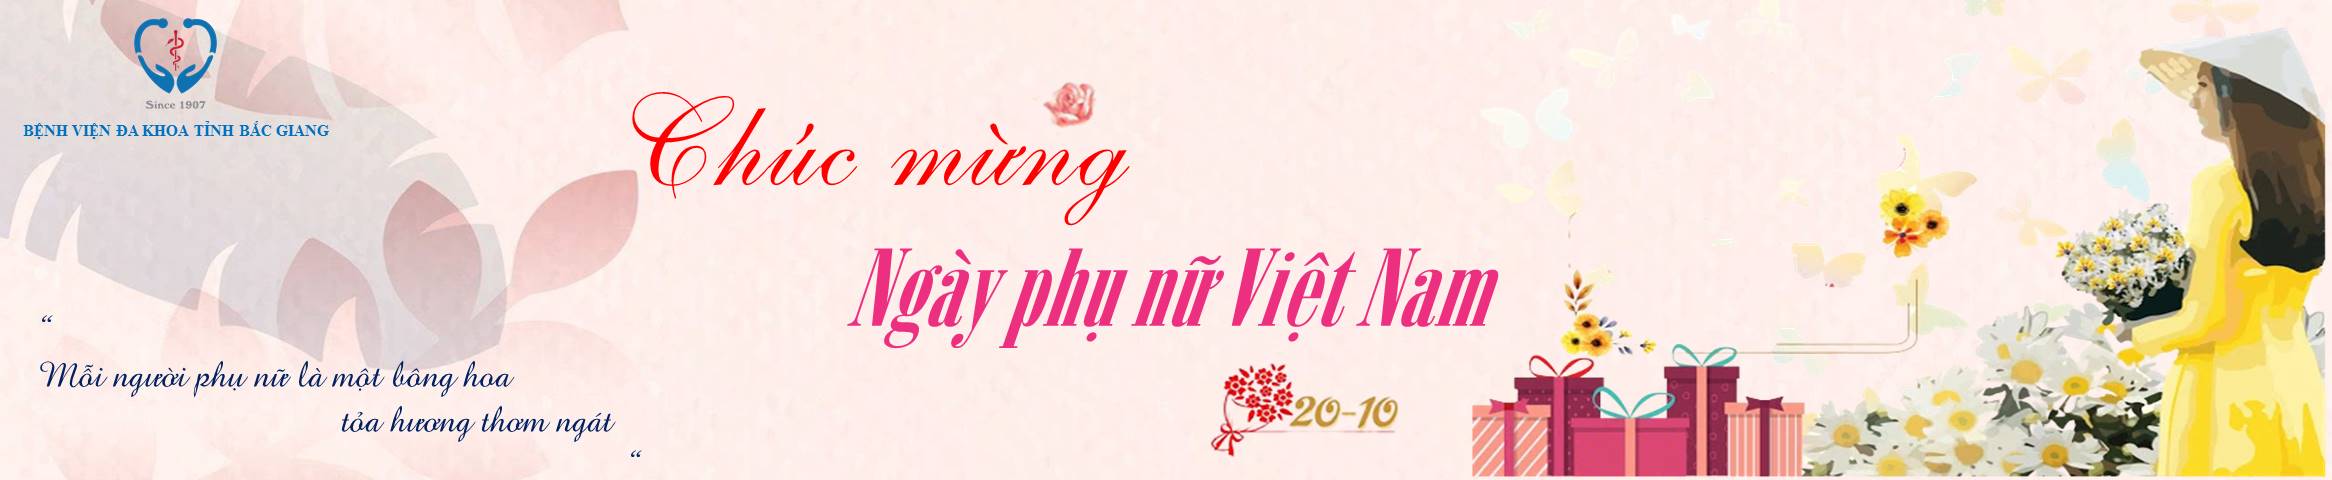 Ngay_phu_nu_Viet_Nam_a3e2ee1623